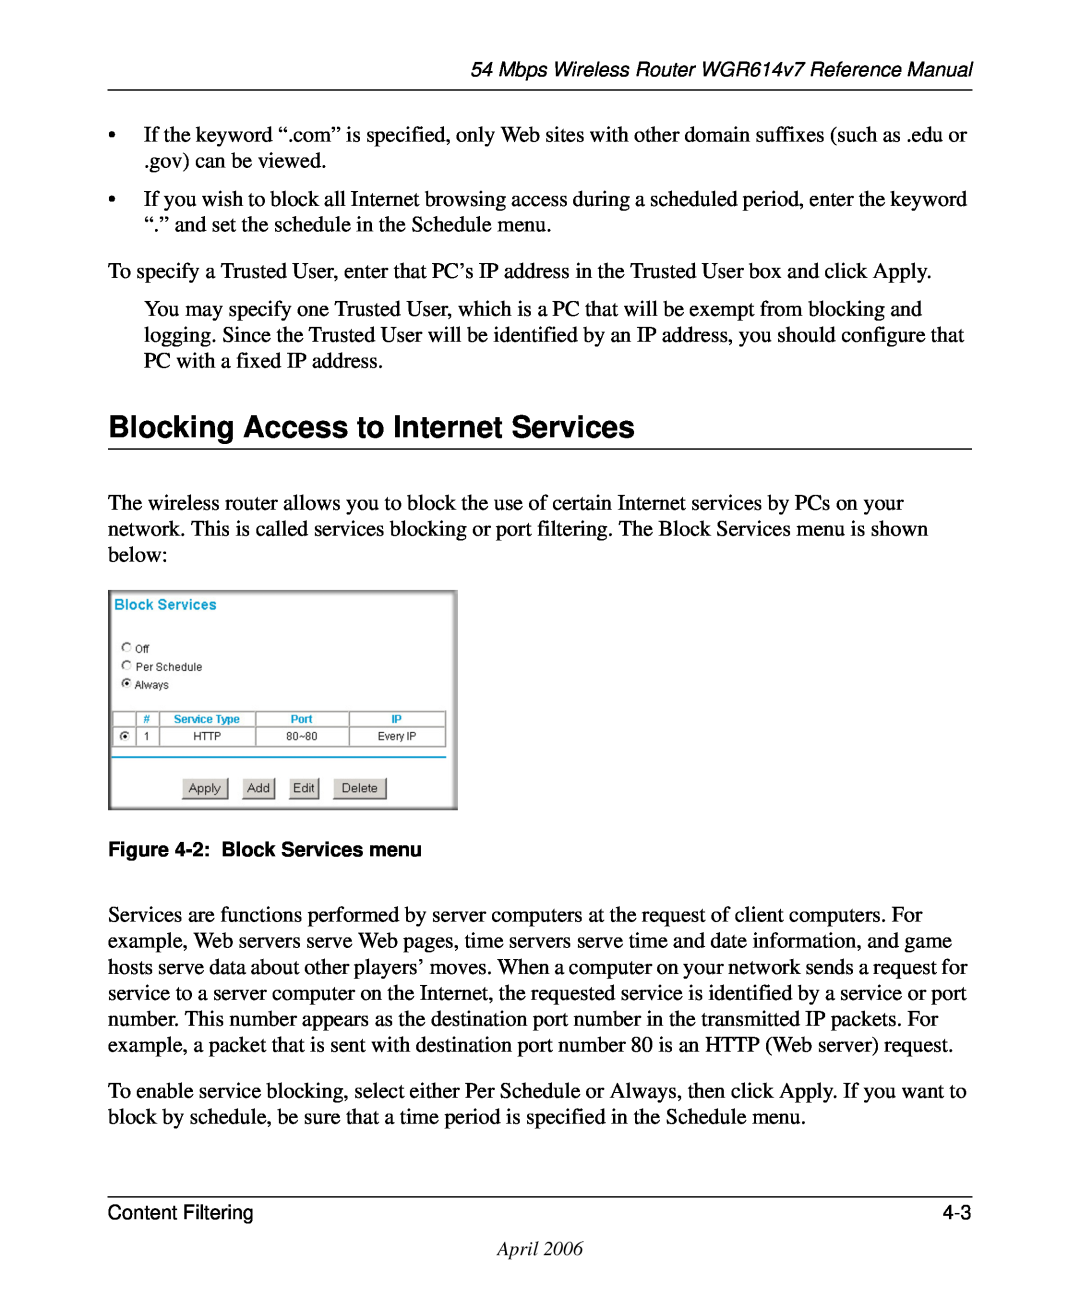 NETGEAR WGR614v7 manual Blocking Access to Internet Services 